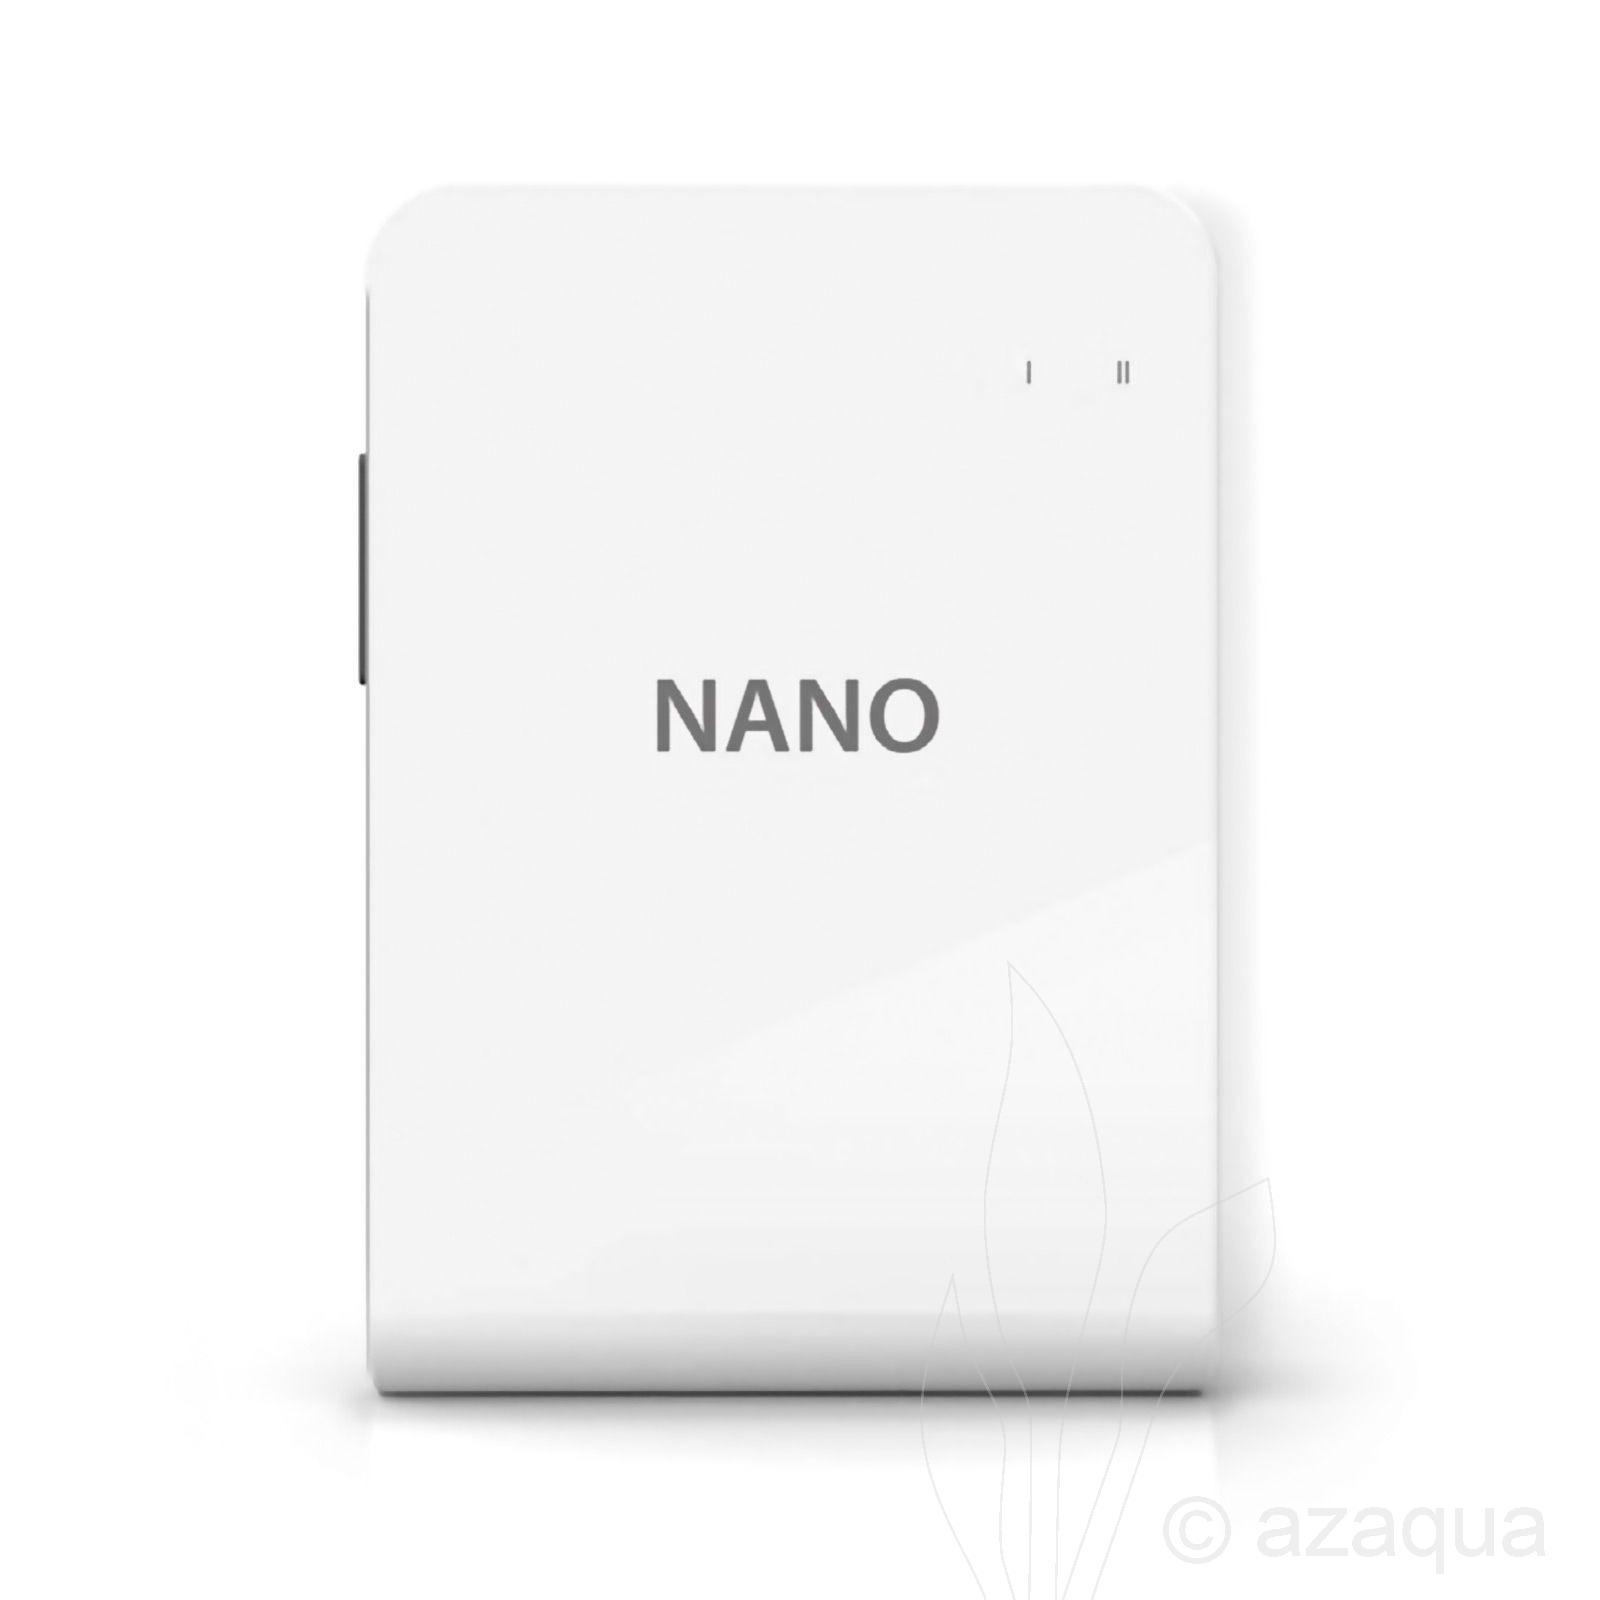 TWINSTAR Nano